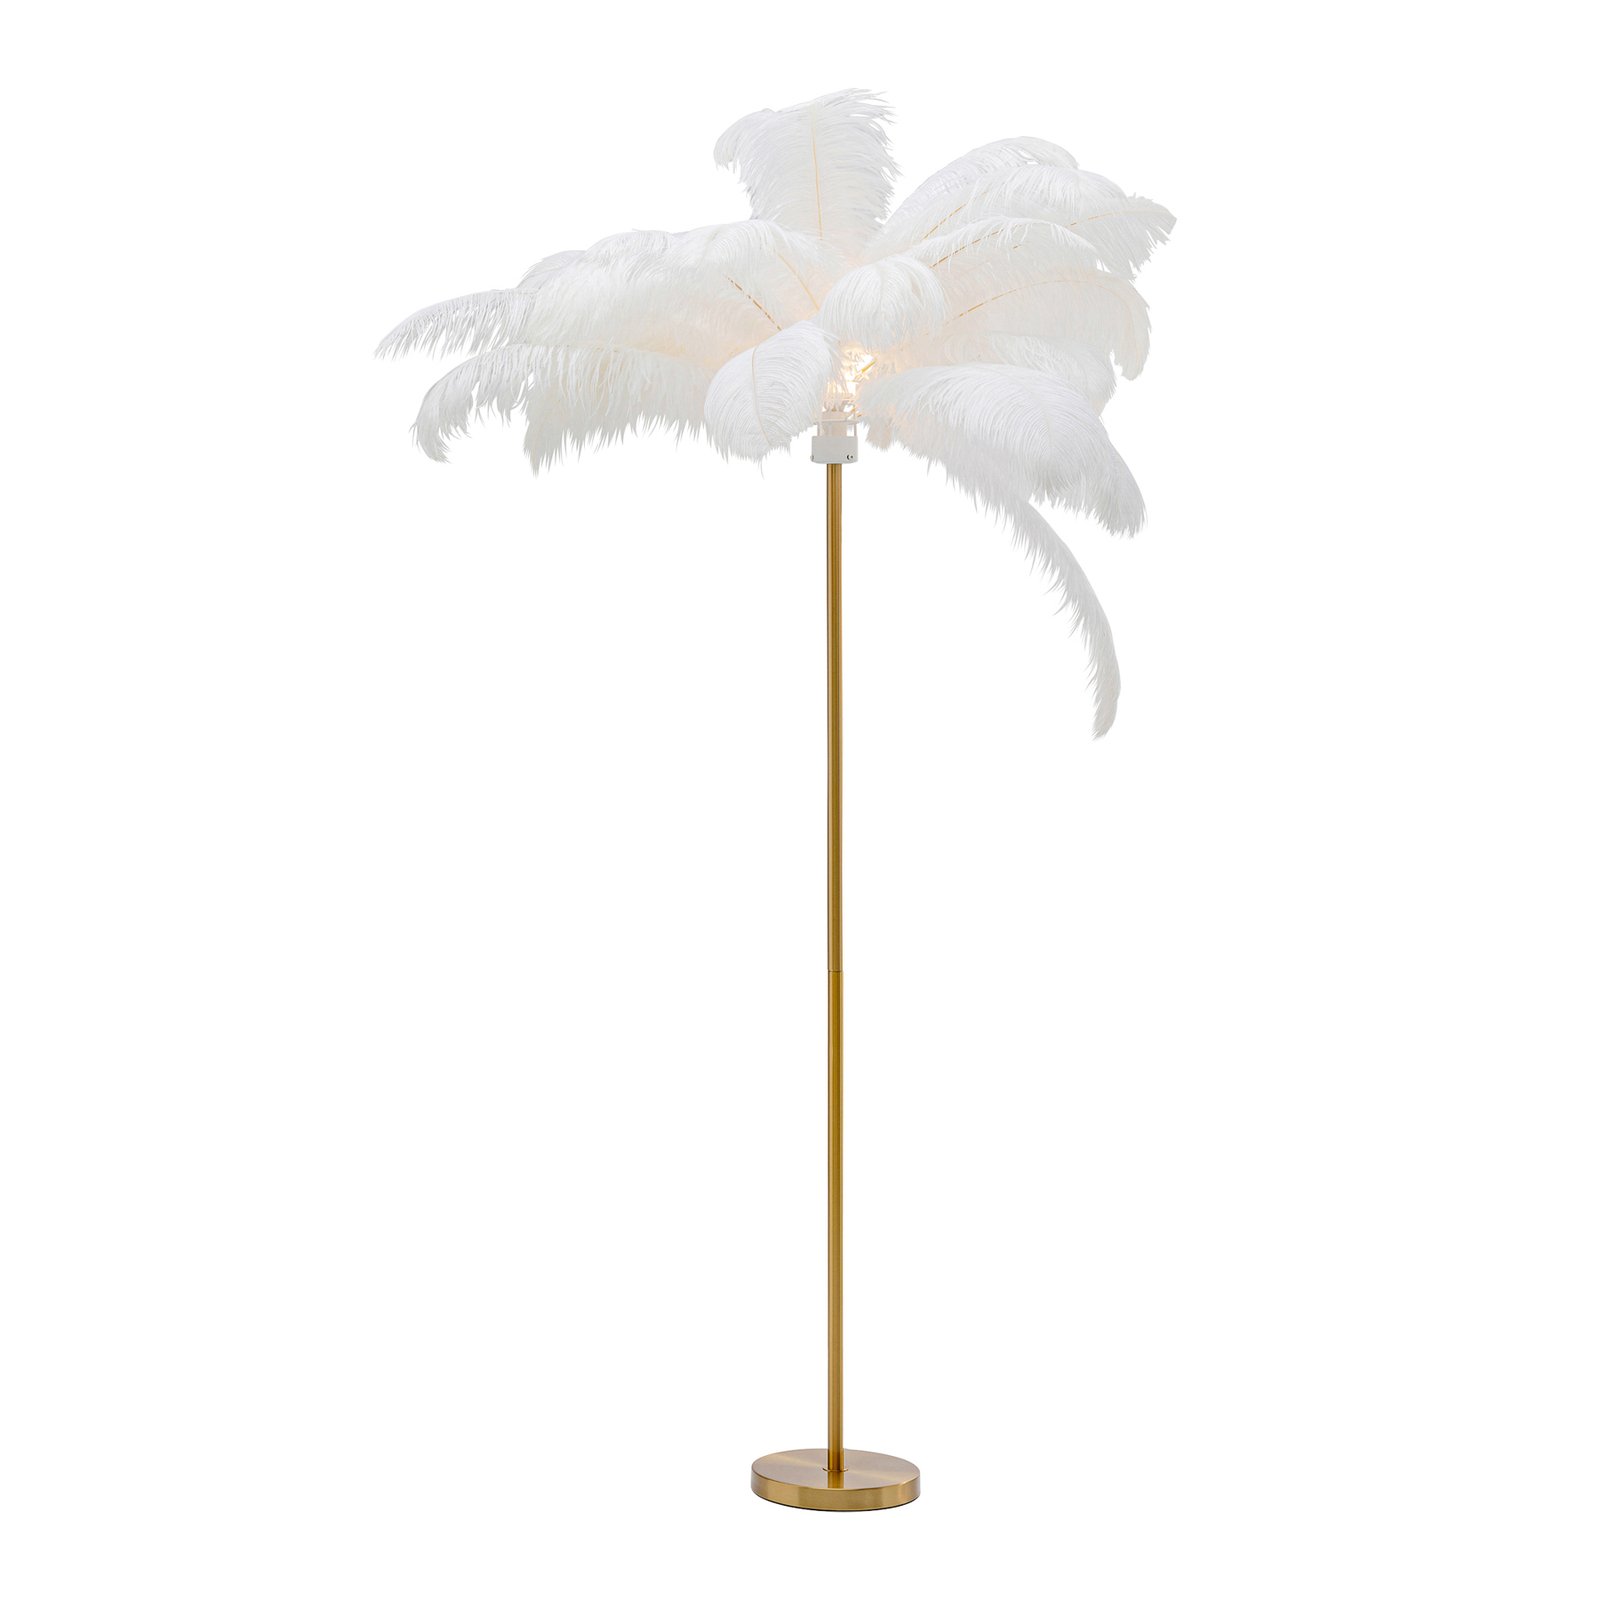 KARE Feather Palm grindų lempa su plunksnomis, balta